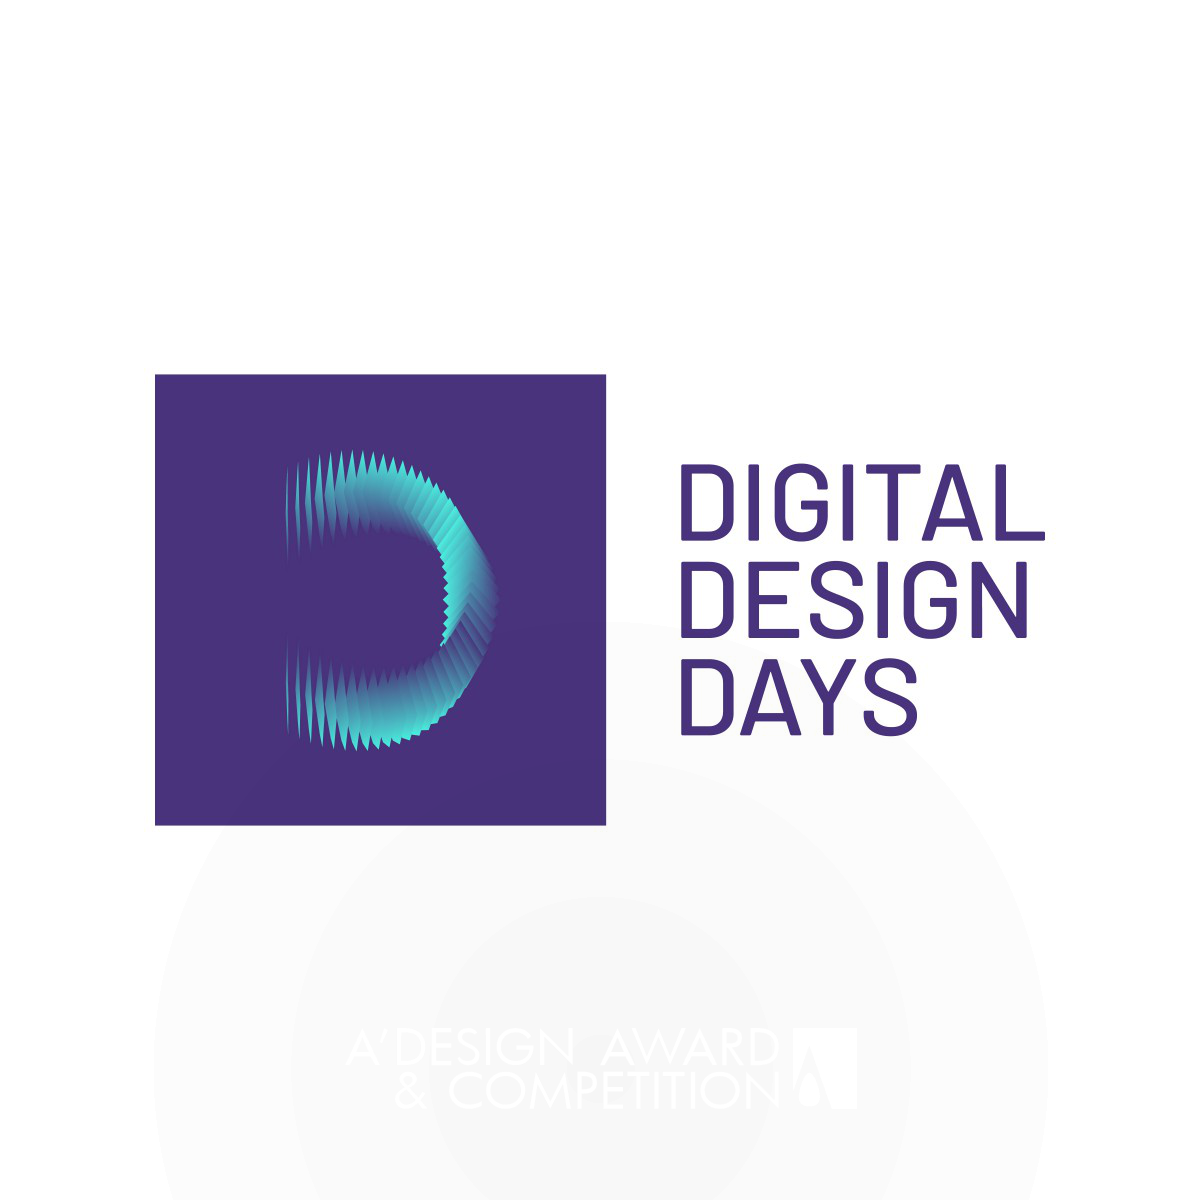 Digital Design Days Rebranding by jekyll & hyde